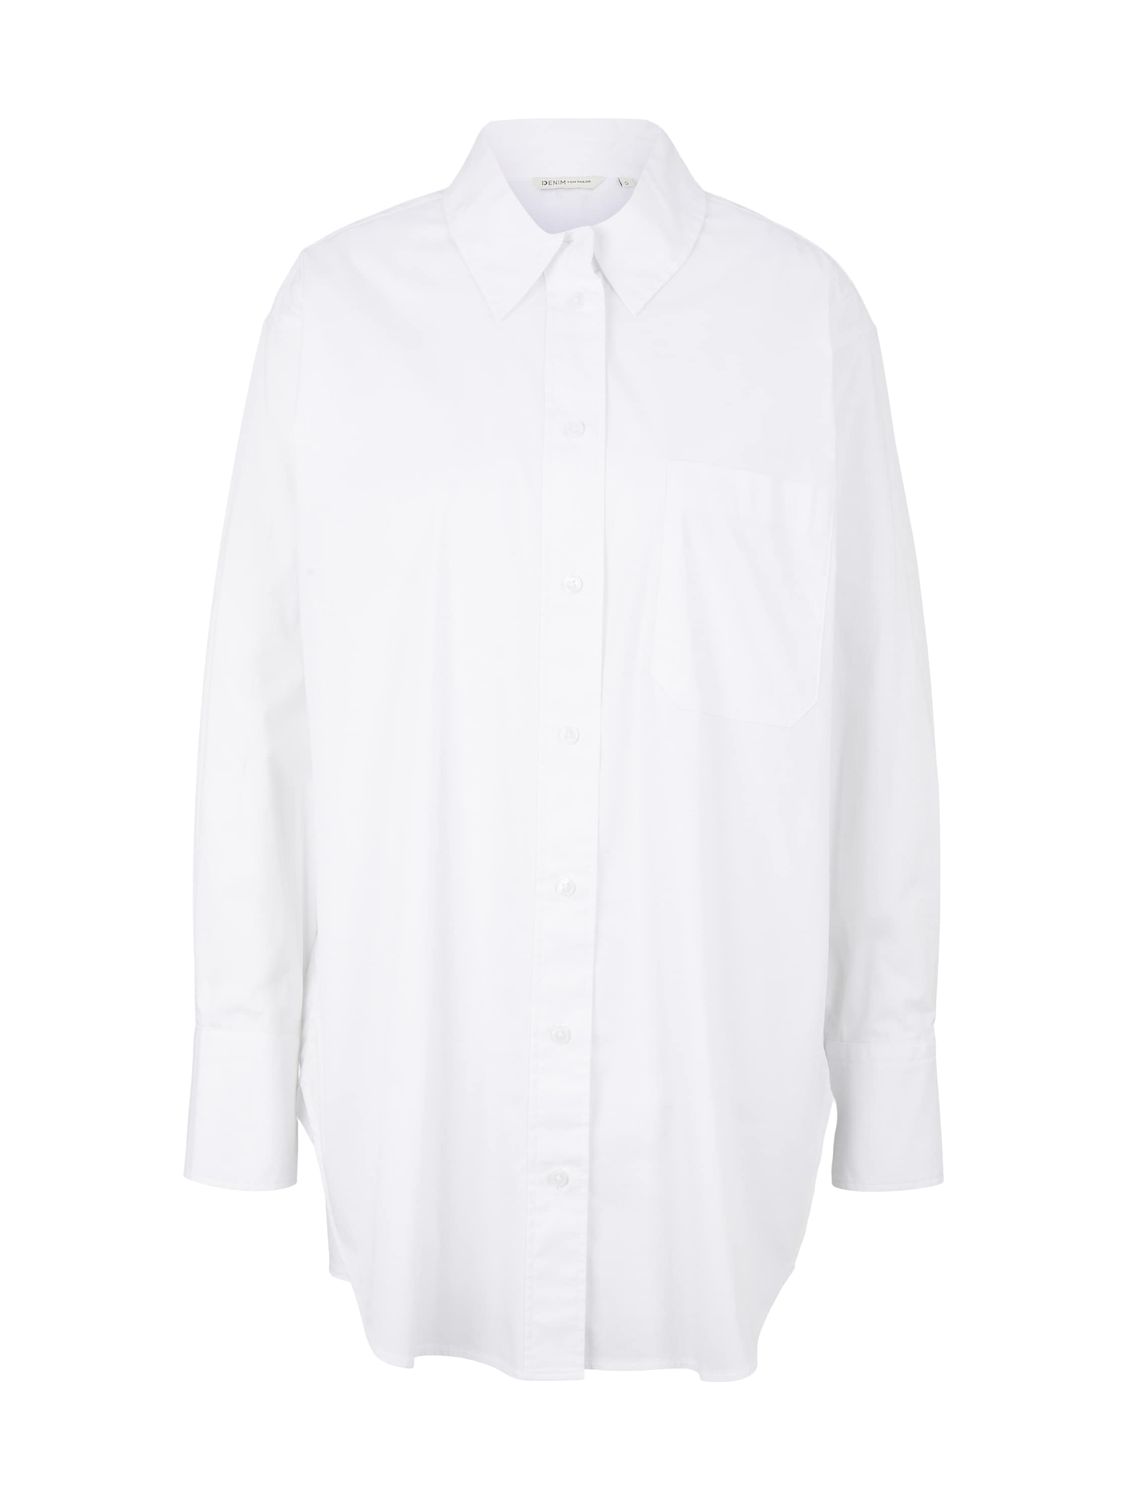 Блуза TOM TAILOR Denim CHEST POCKET, белый футболка tom tailor размер xxl белый голубой